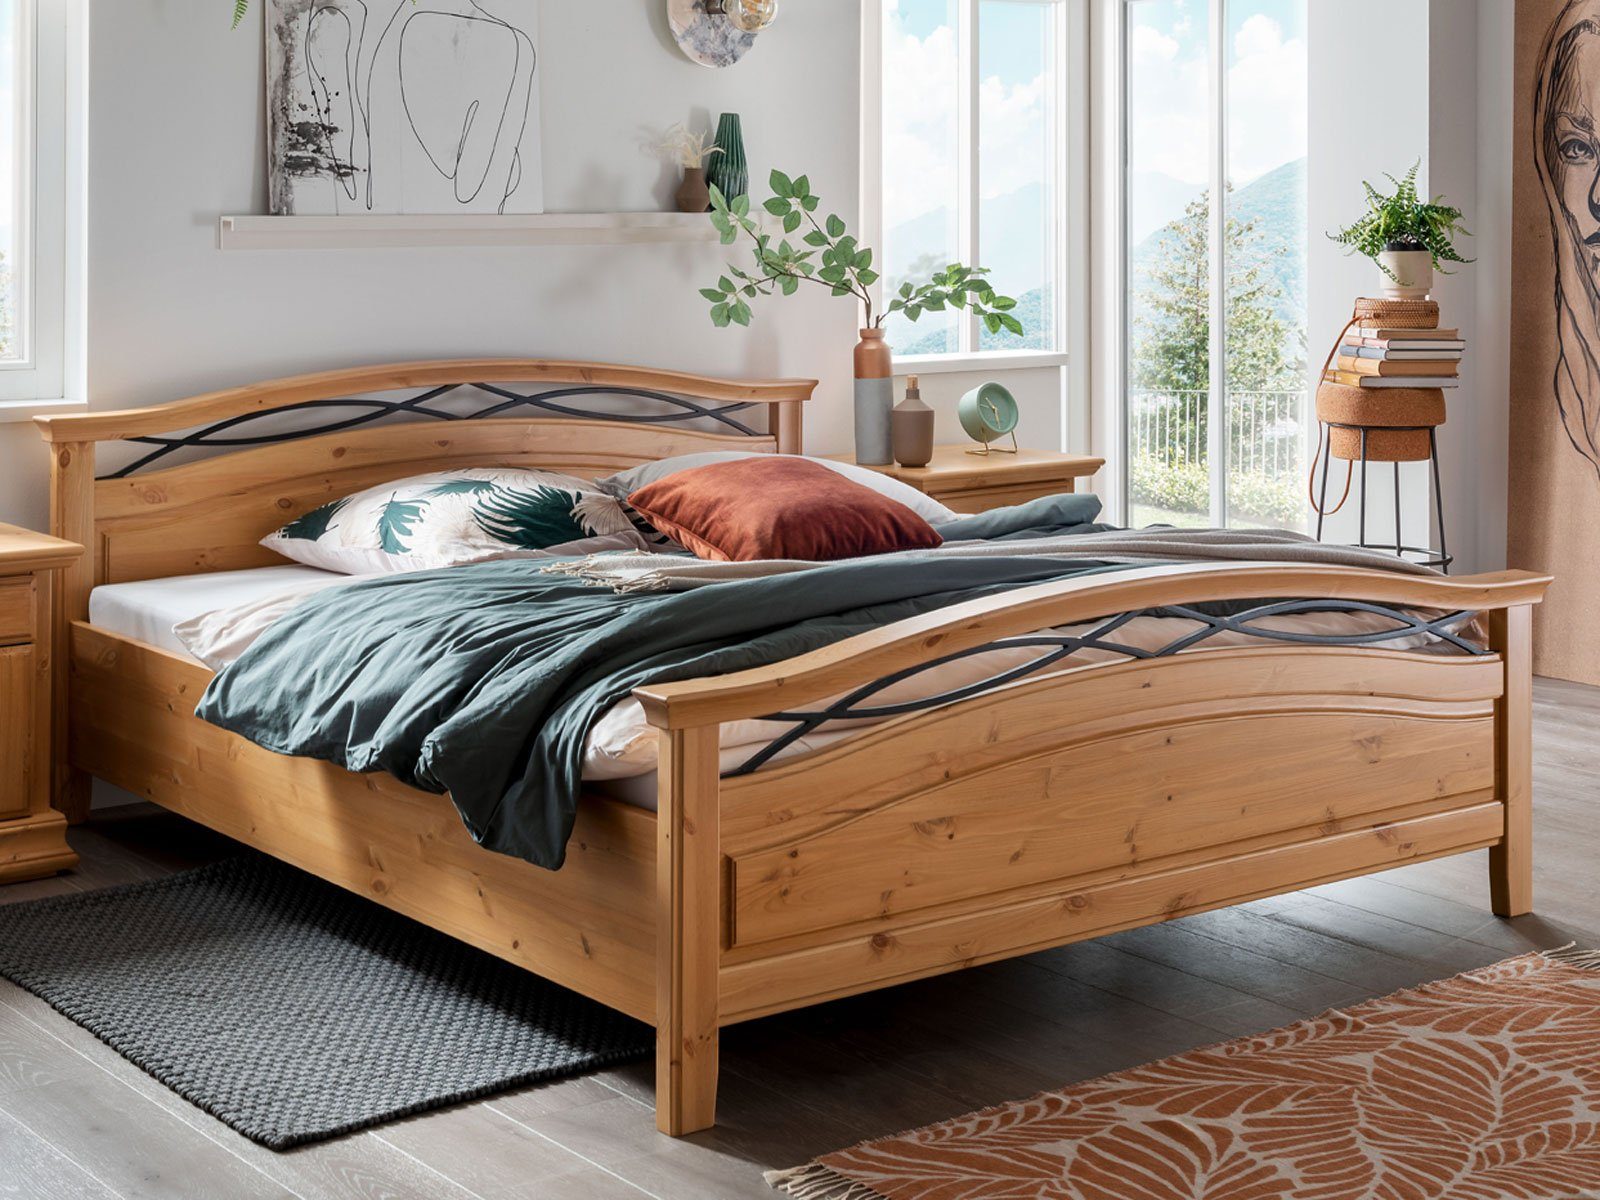 Casamia Massivholzbett Bett 180x200cm Doppelbett Catania Holz Pinie Nordica massiv natur